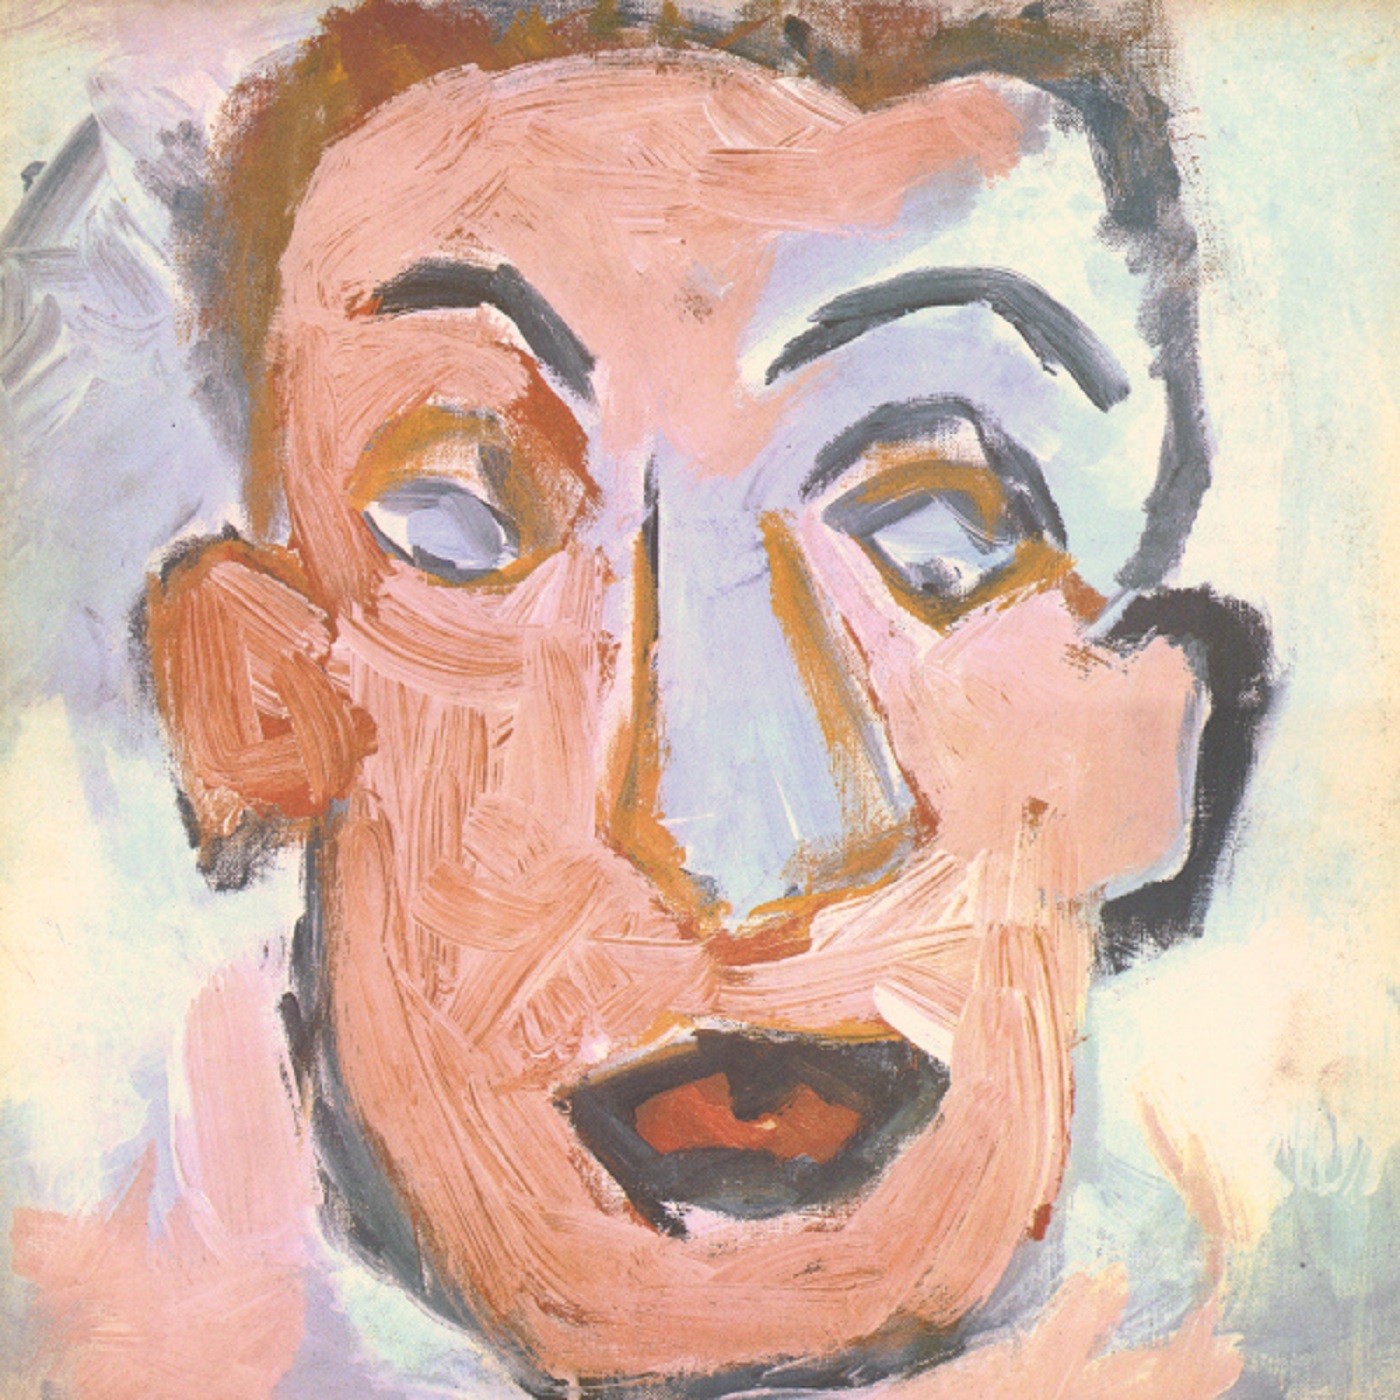 Bob Dylan’s ”Self Portrait” (with Dewey Paul Moffitt)